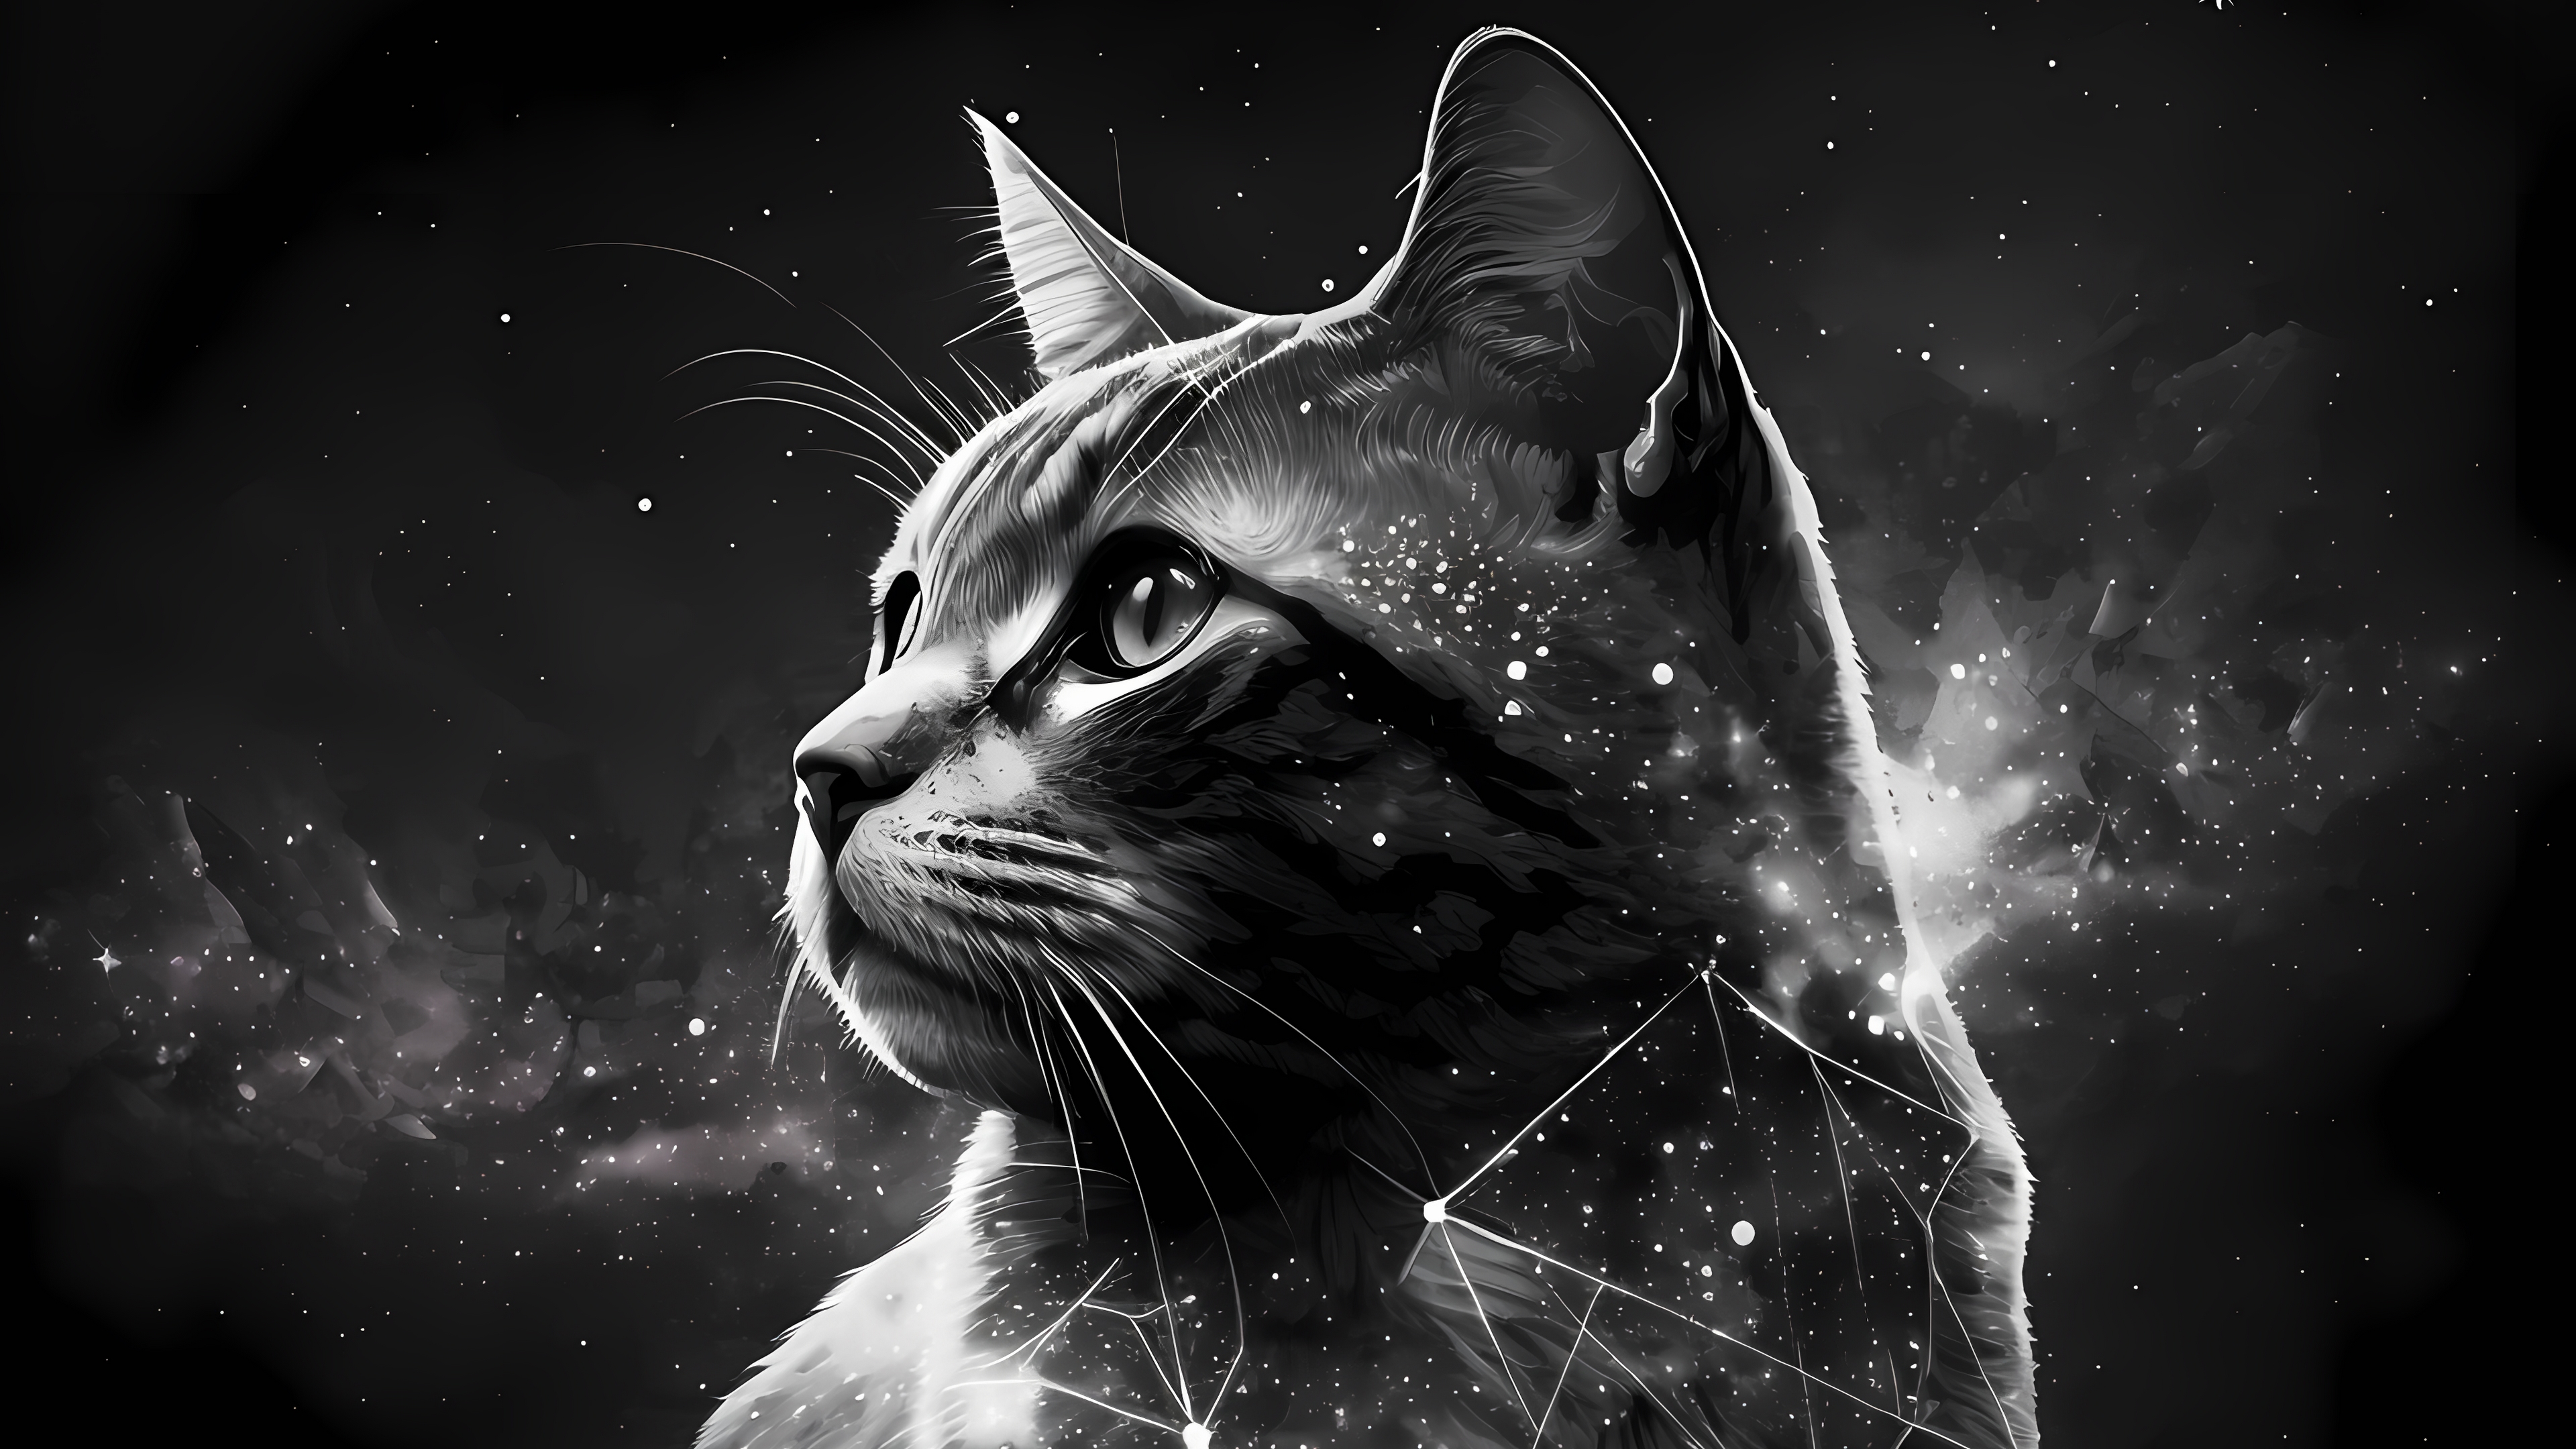 Фото кошка, искусство, небо, звезды, фэнтези, минимализм - бесплатные картинки на Fonwall